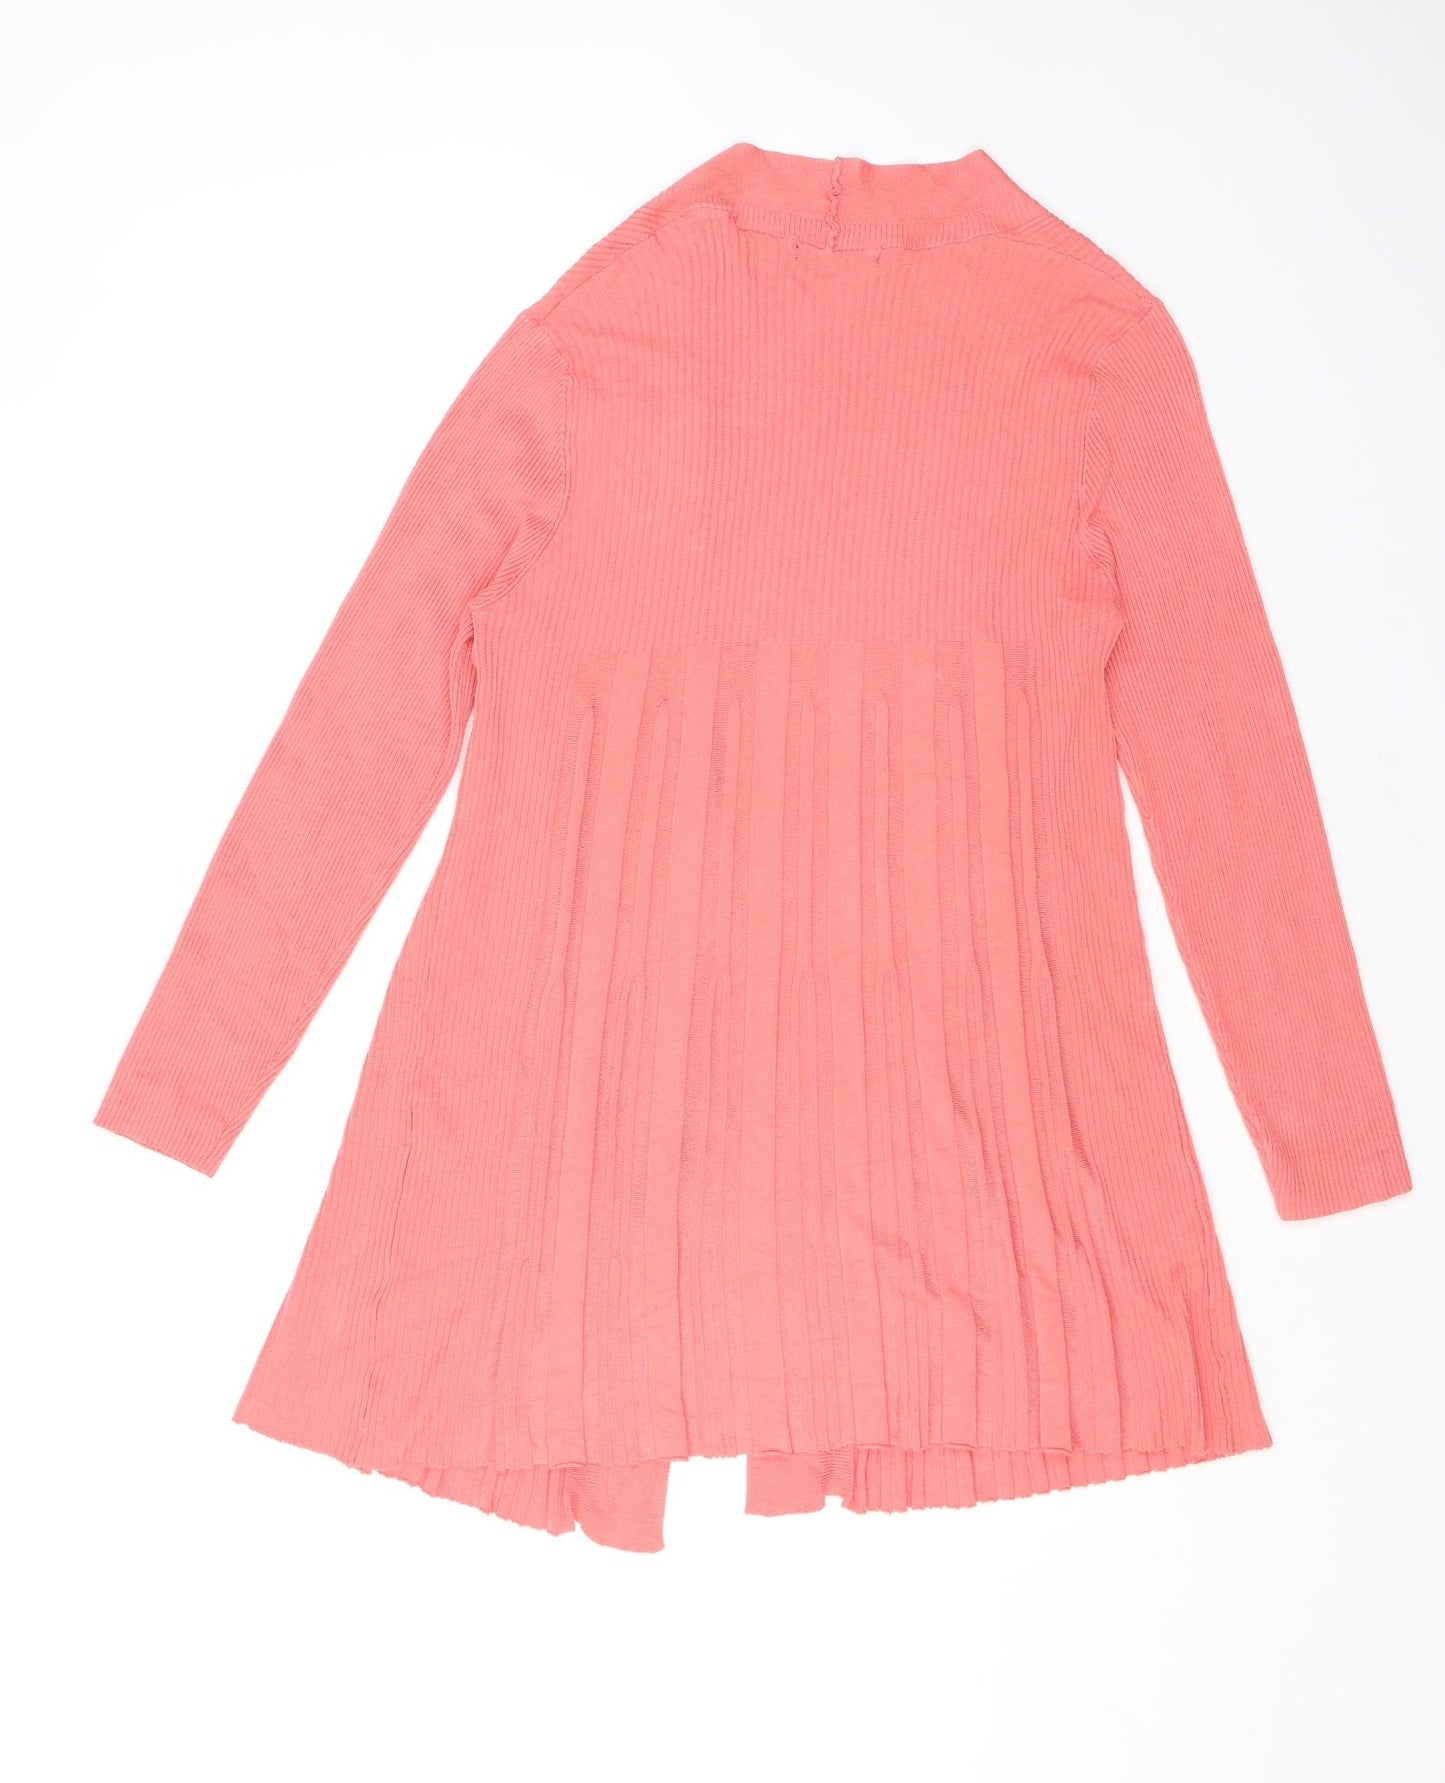 Bonmarché Womens Pink V-Neck Viscose Cardigan Jumper Size S